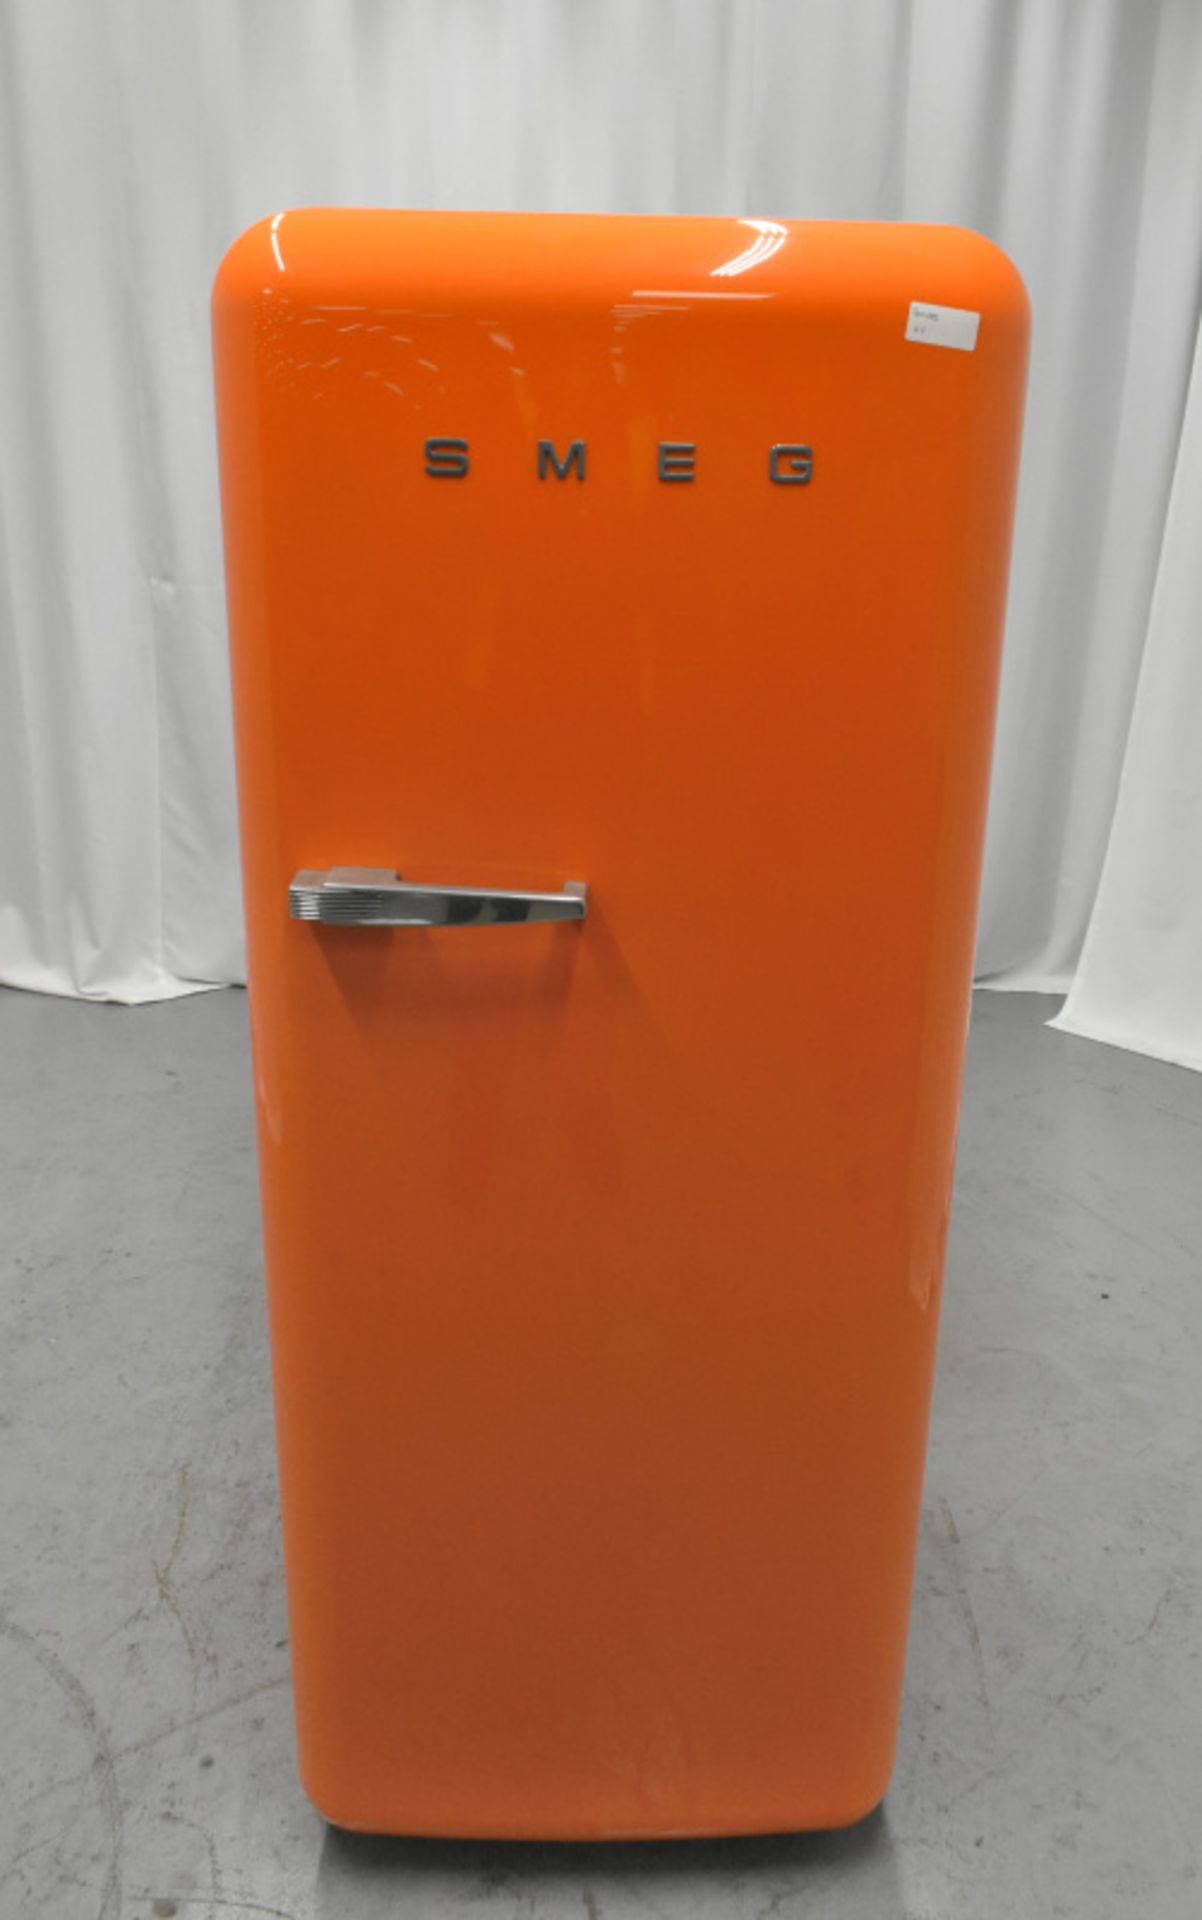 Smeg Retro Orange Fridge - Model FAB28QO1 with small freezer compartment - 600 x 1510 x 54